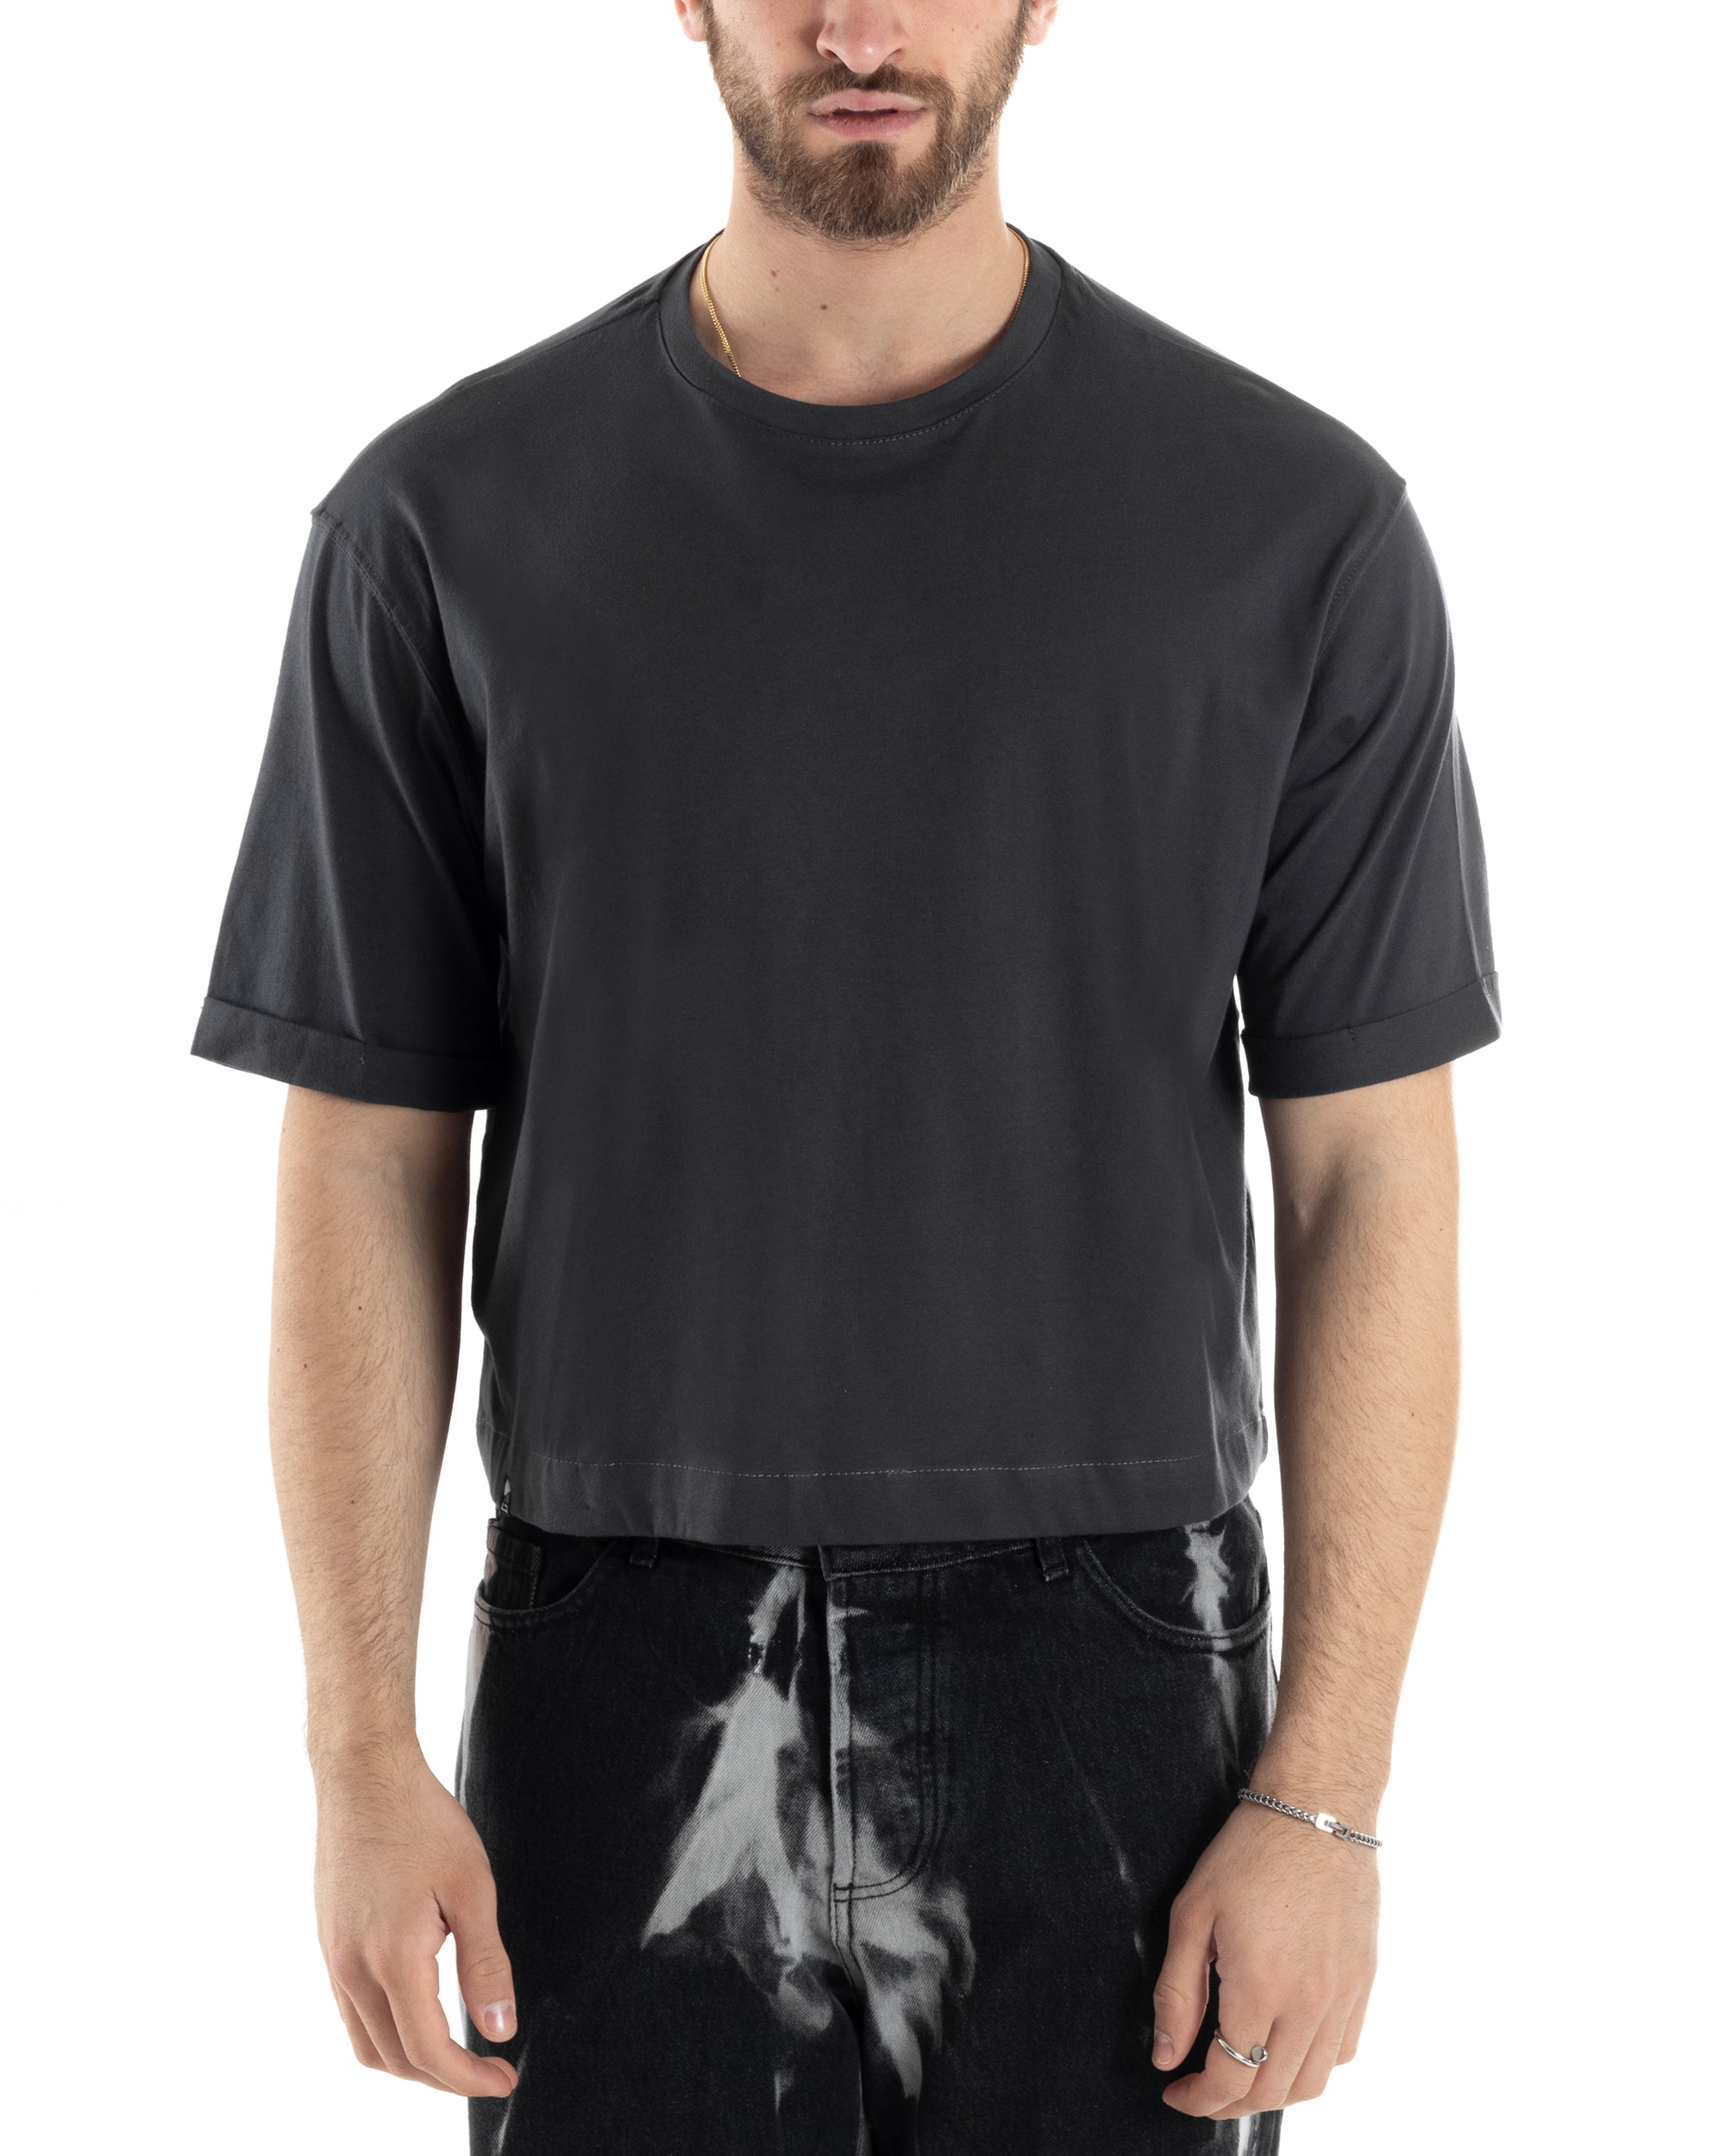 T-shirt Uomo Cropped Corta Boxy Fit Tinta Unita Piombo Casual GIOSAL-TS3005A